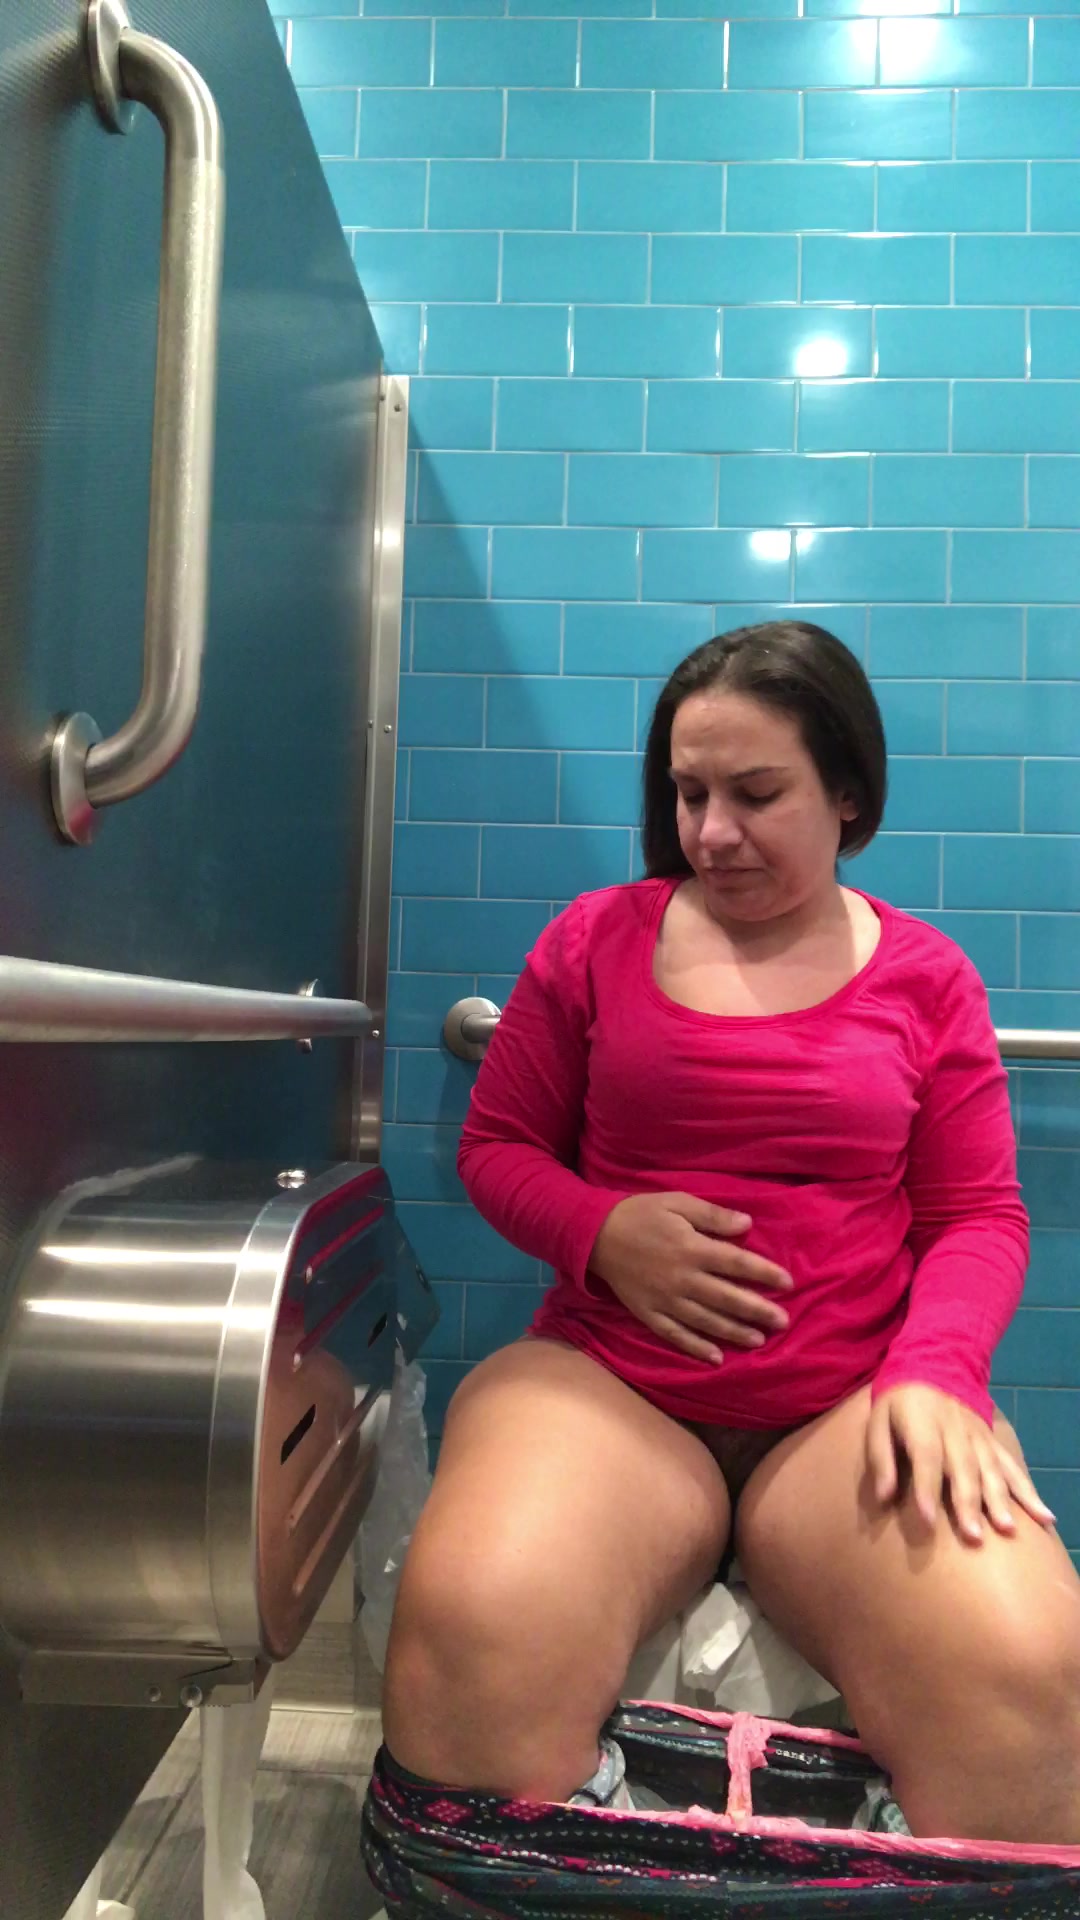 Pink shirt woman public toilet poop